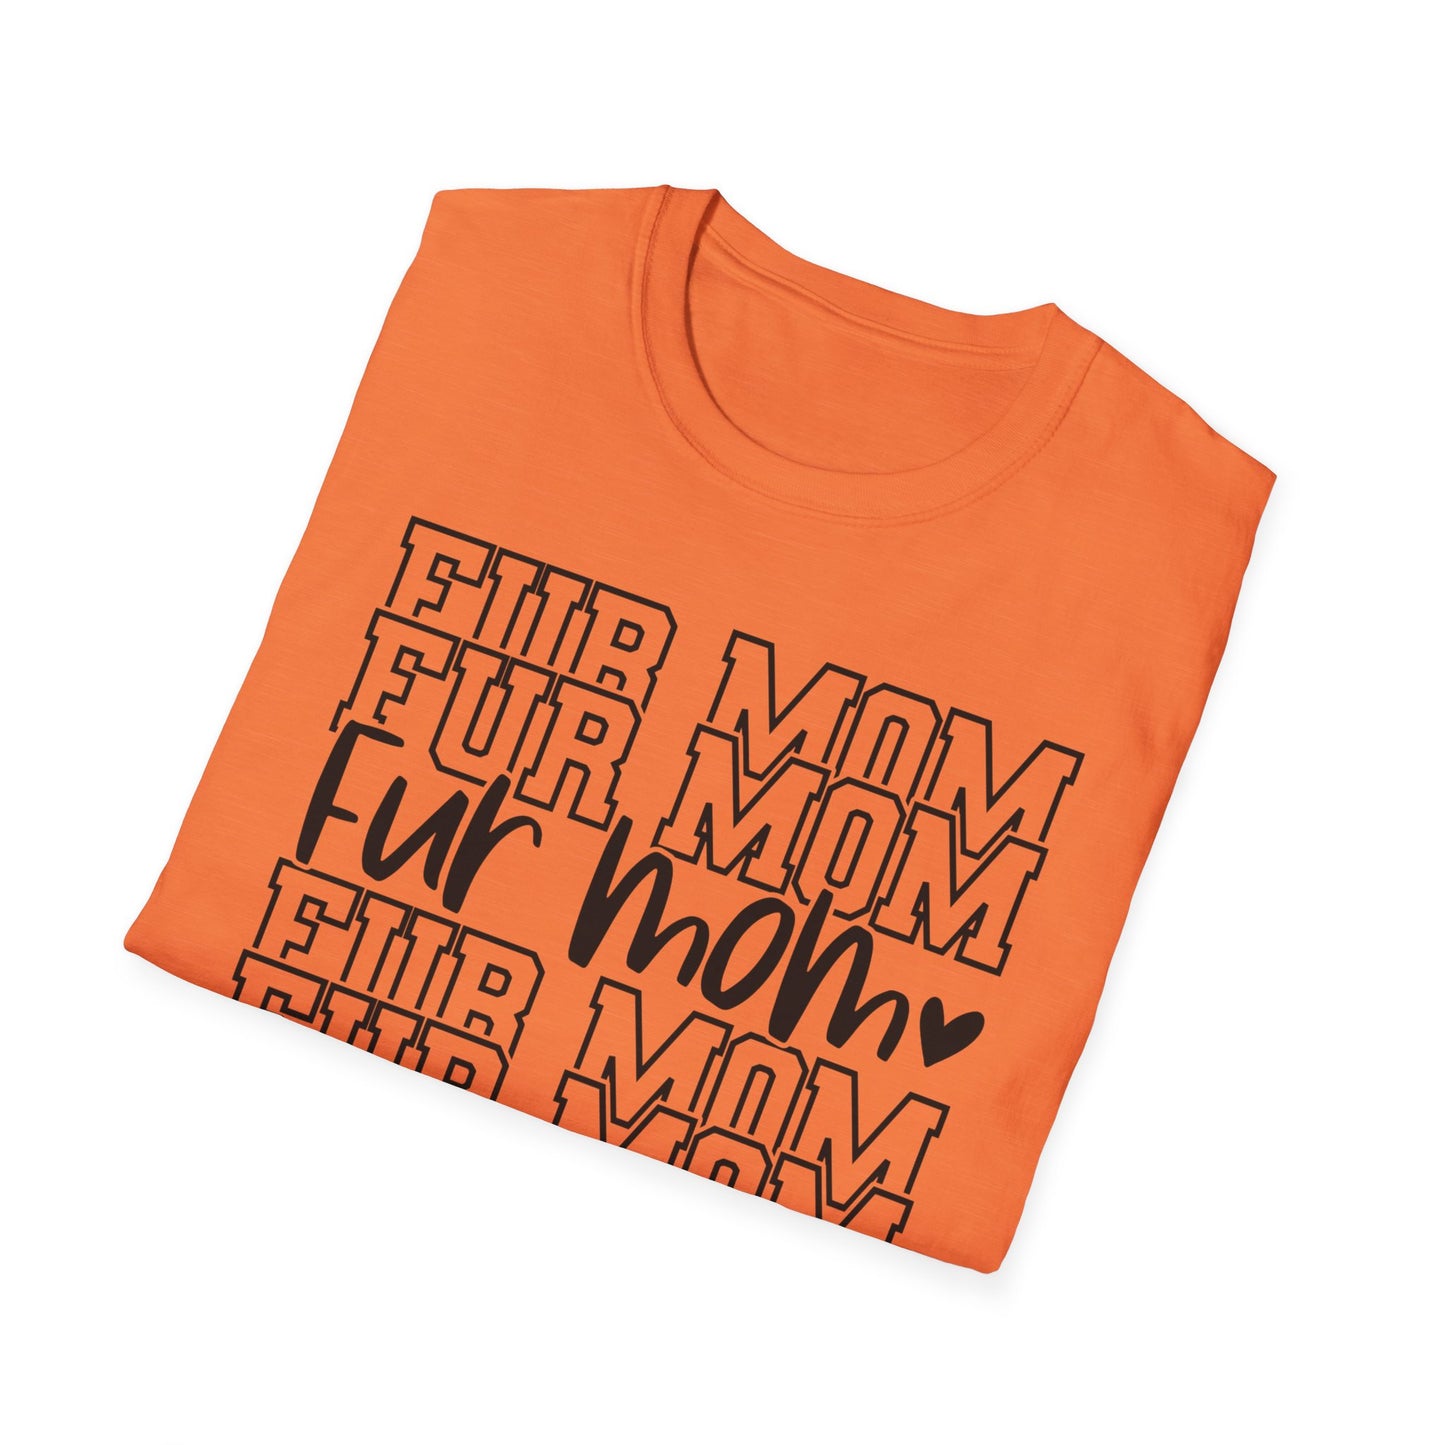 Fur MOM - Unisex Softstyle T-Shirt